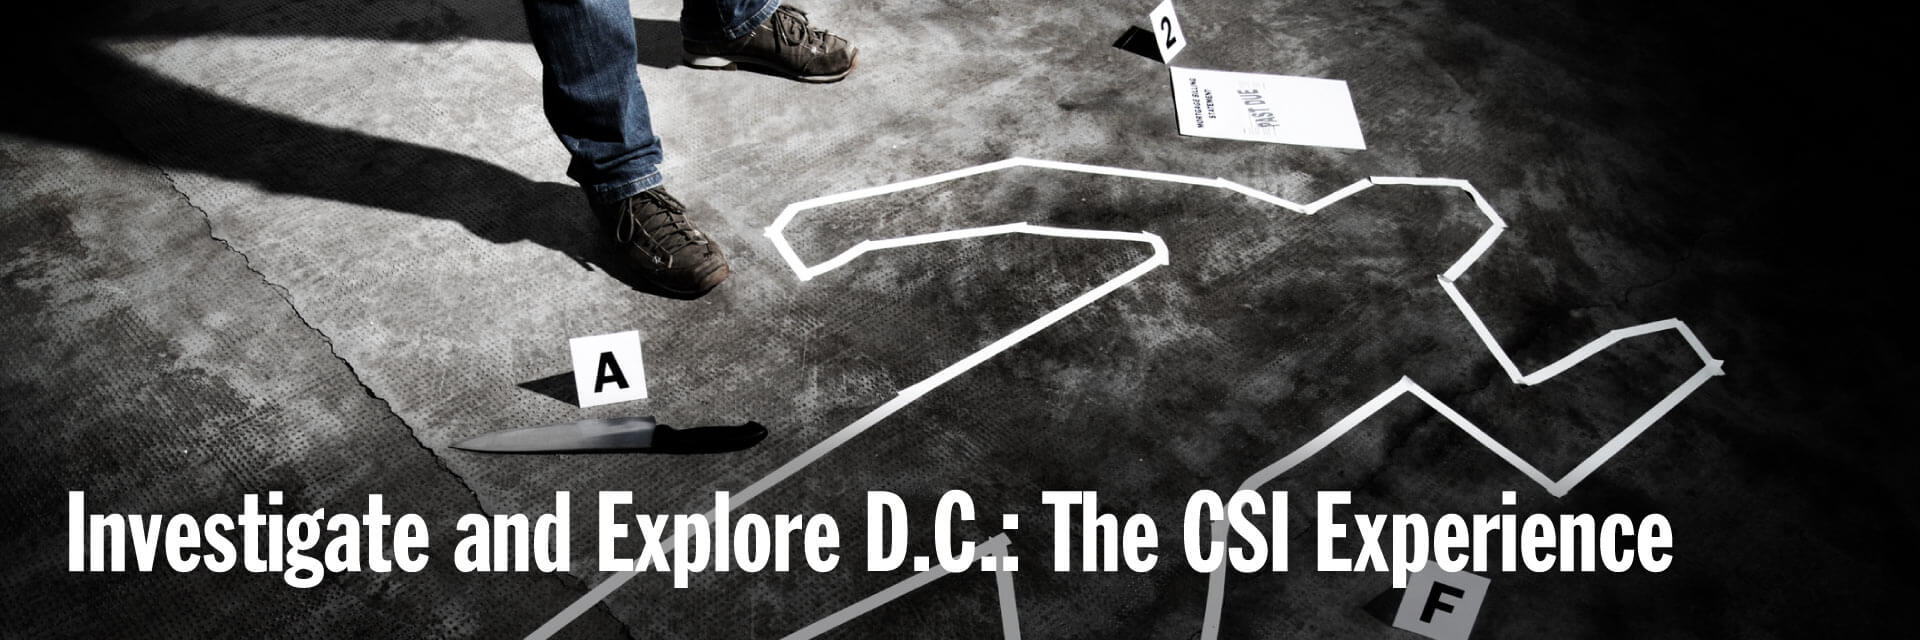 Investigate and Explore D.C.: The CSI Experience